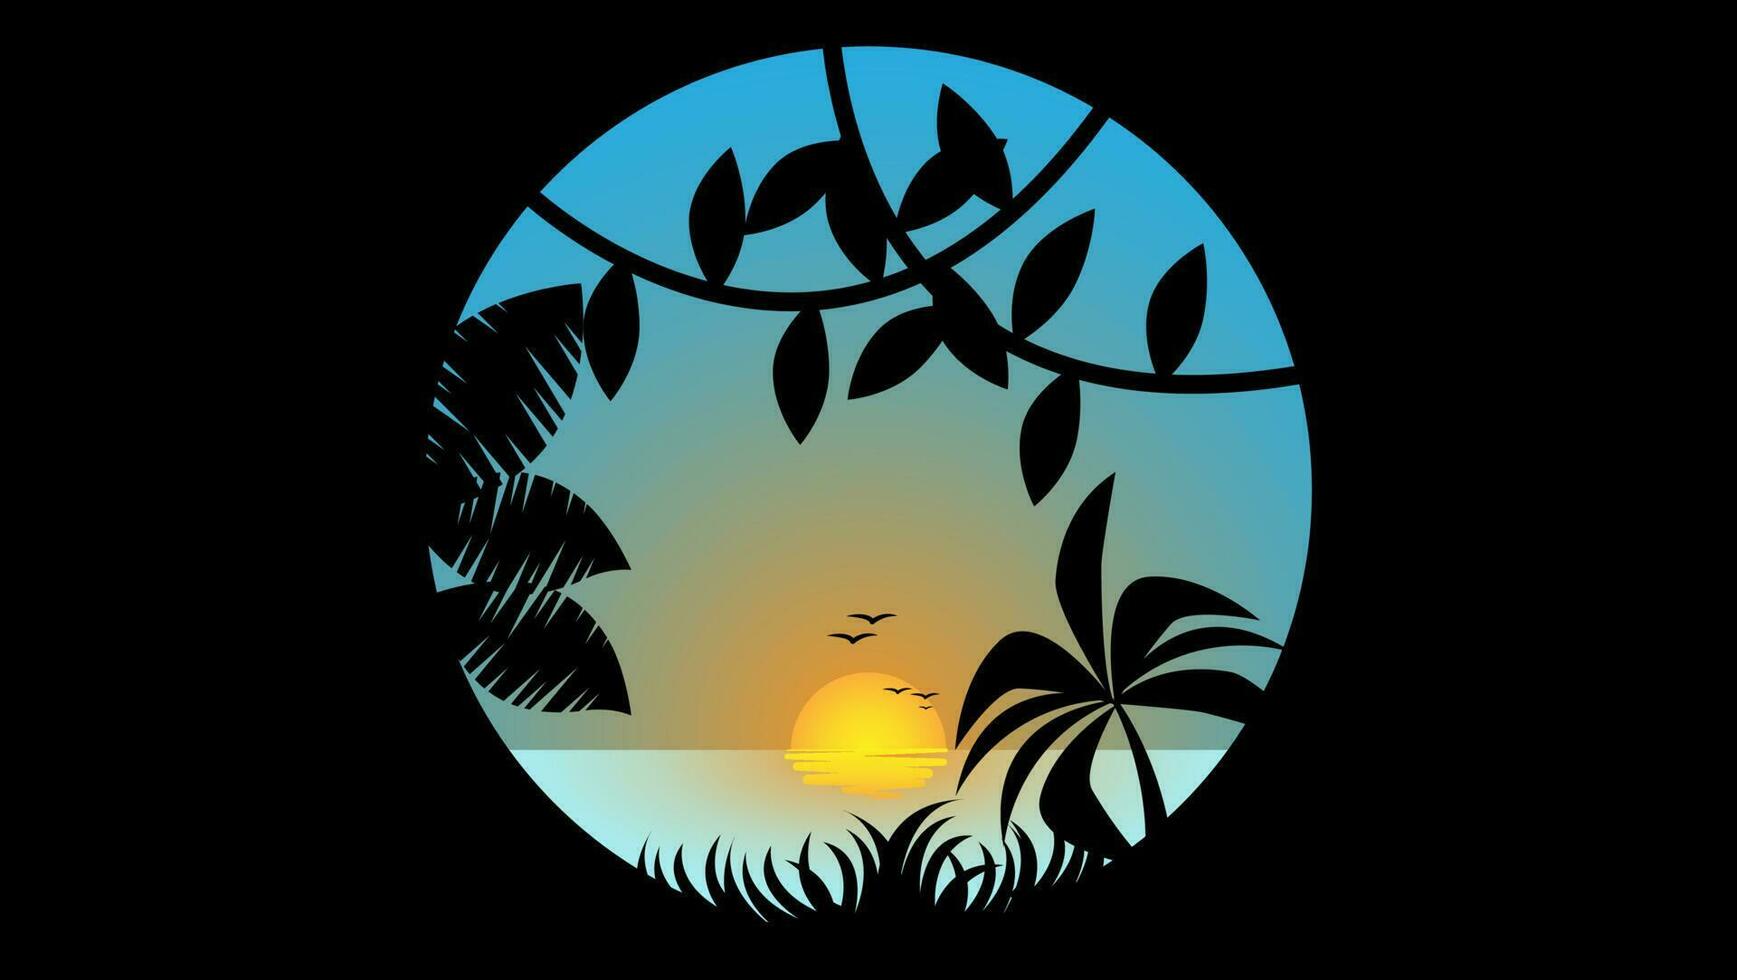 sunrise illustration vector on circular shape